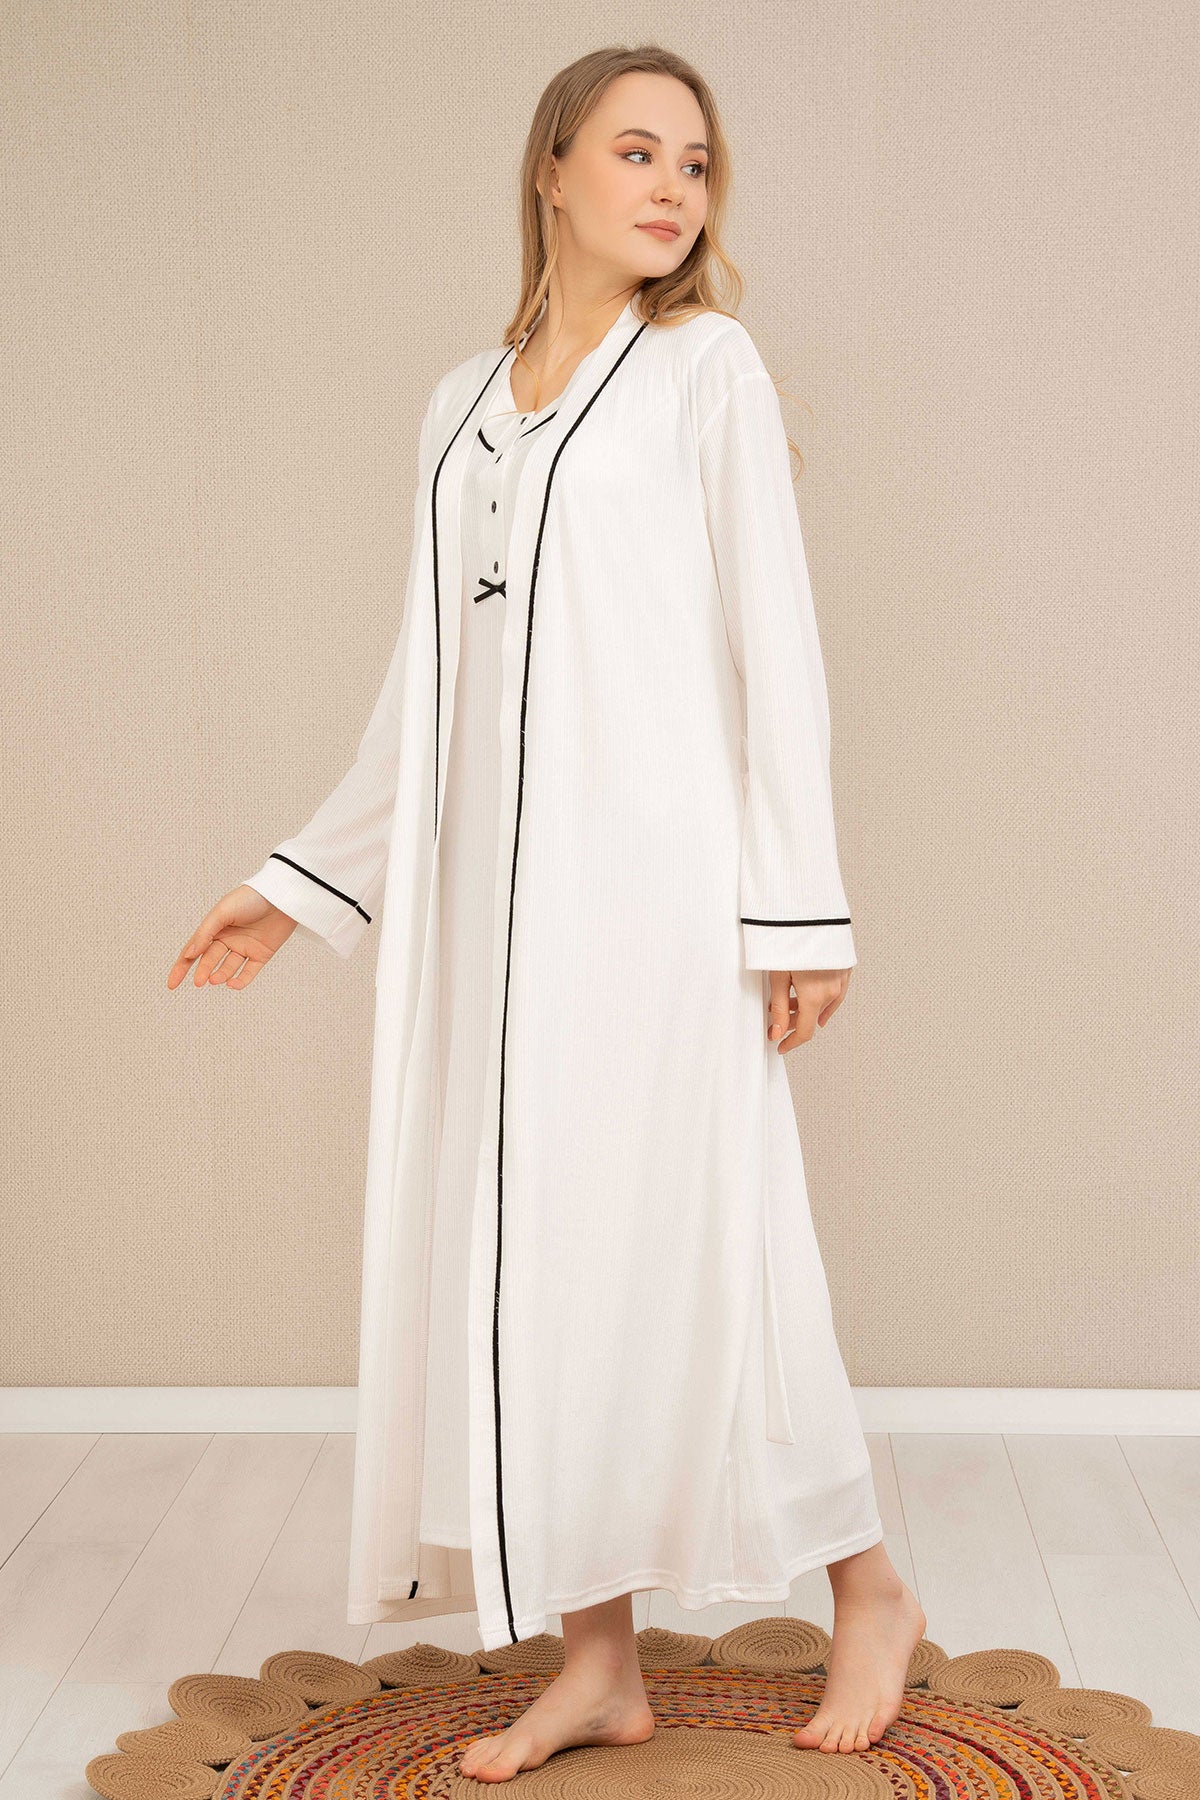 Strap Maternity & Nursing Nightgown Stripe Robe Ecru - 4525